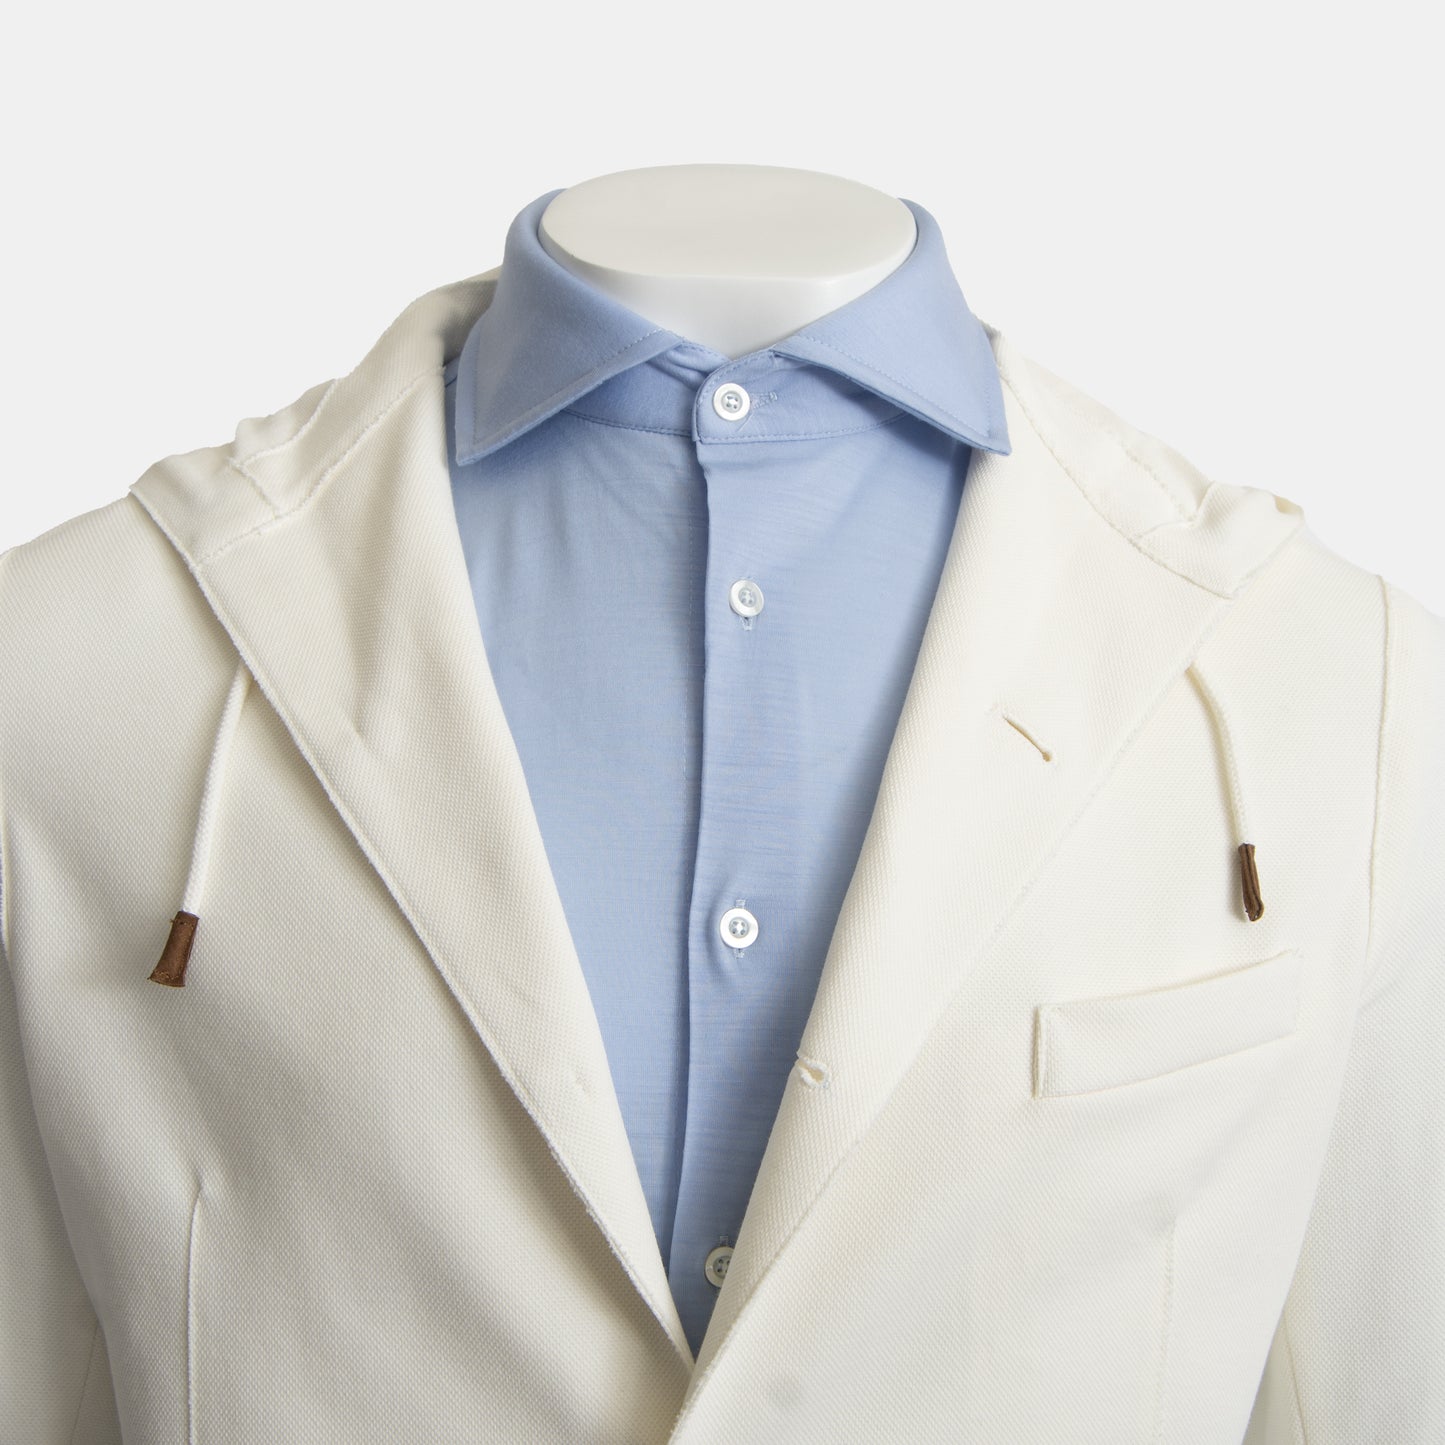 Khaki’s of Carmel - White Lazer Jacket